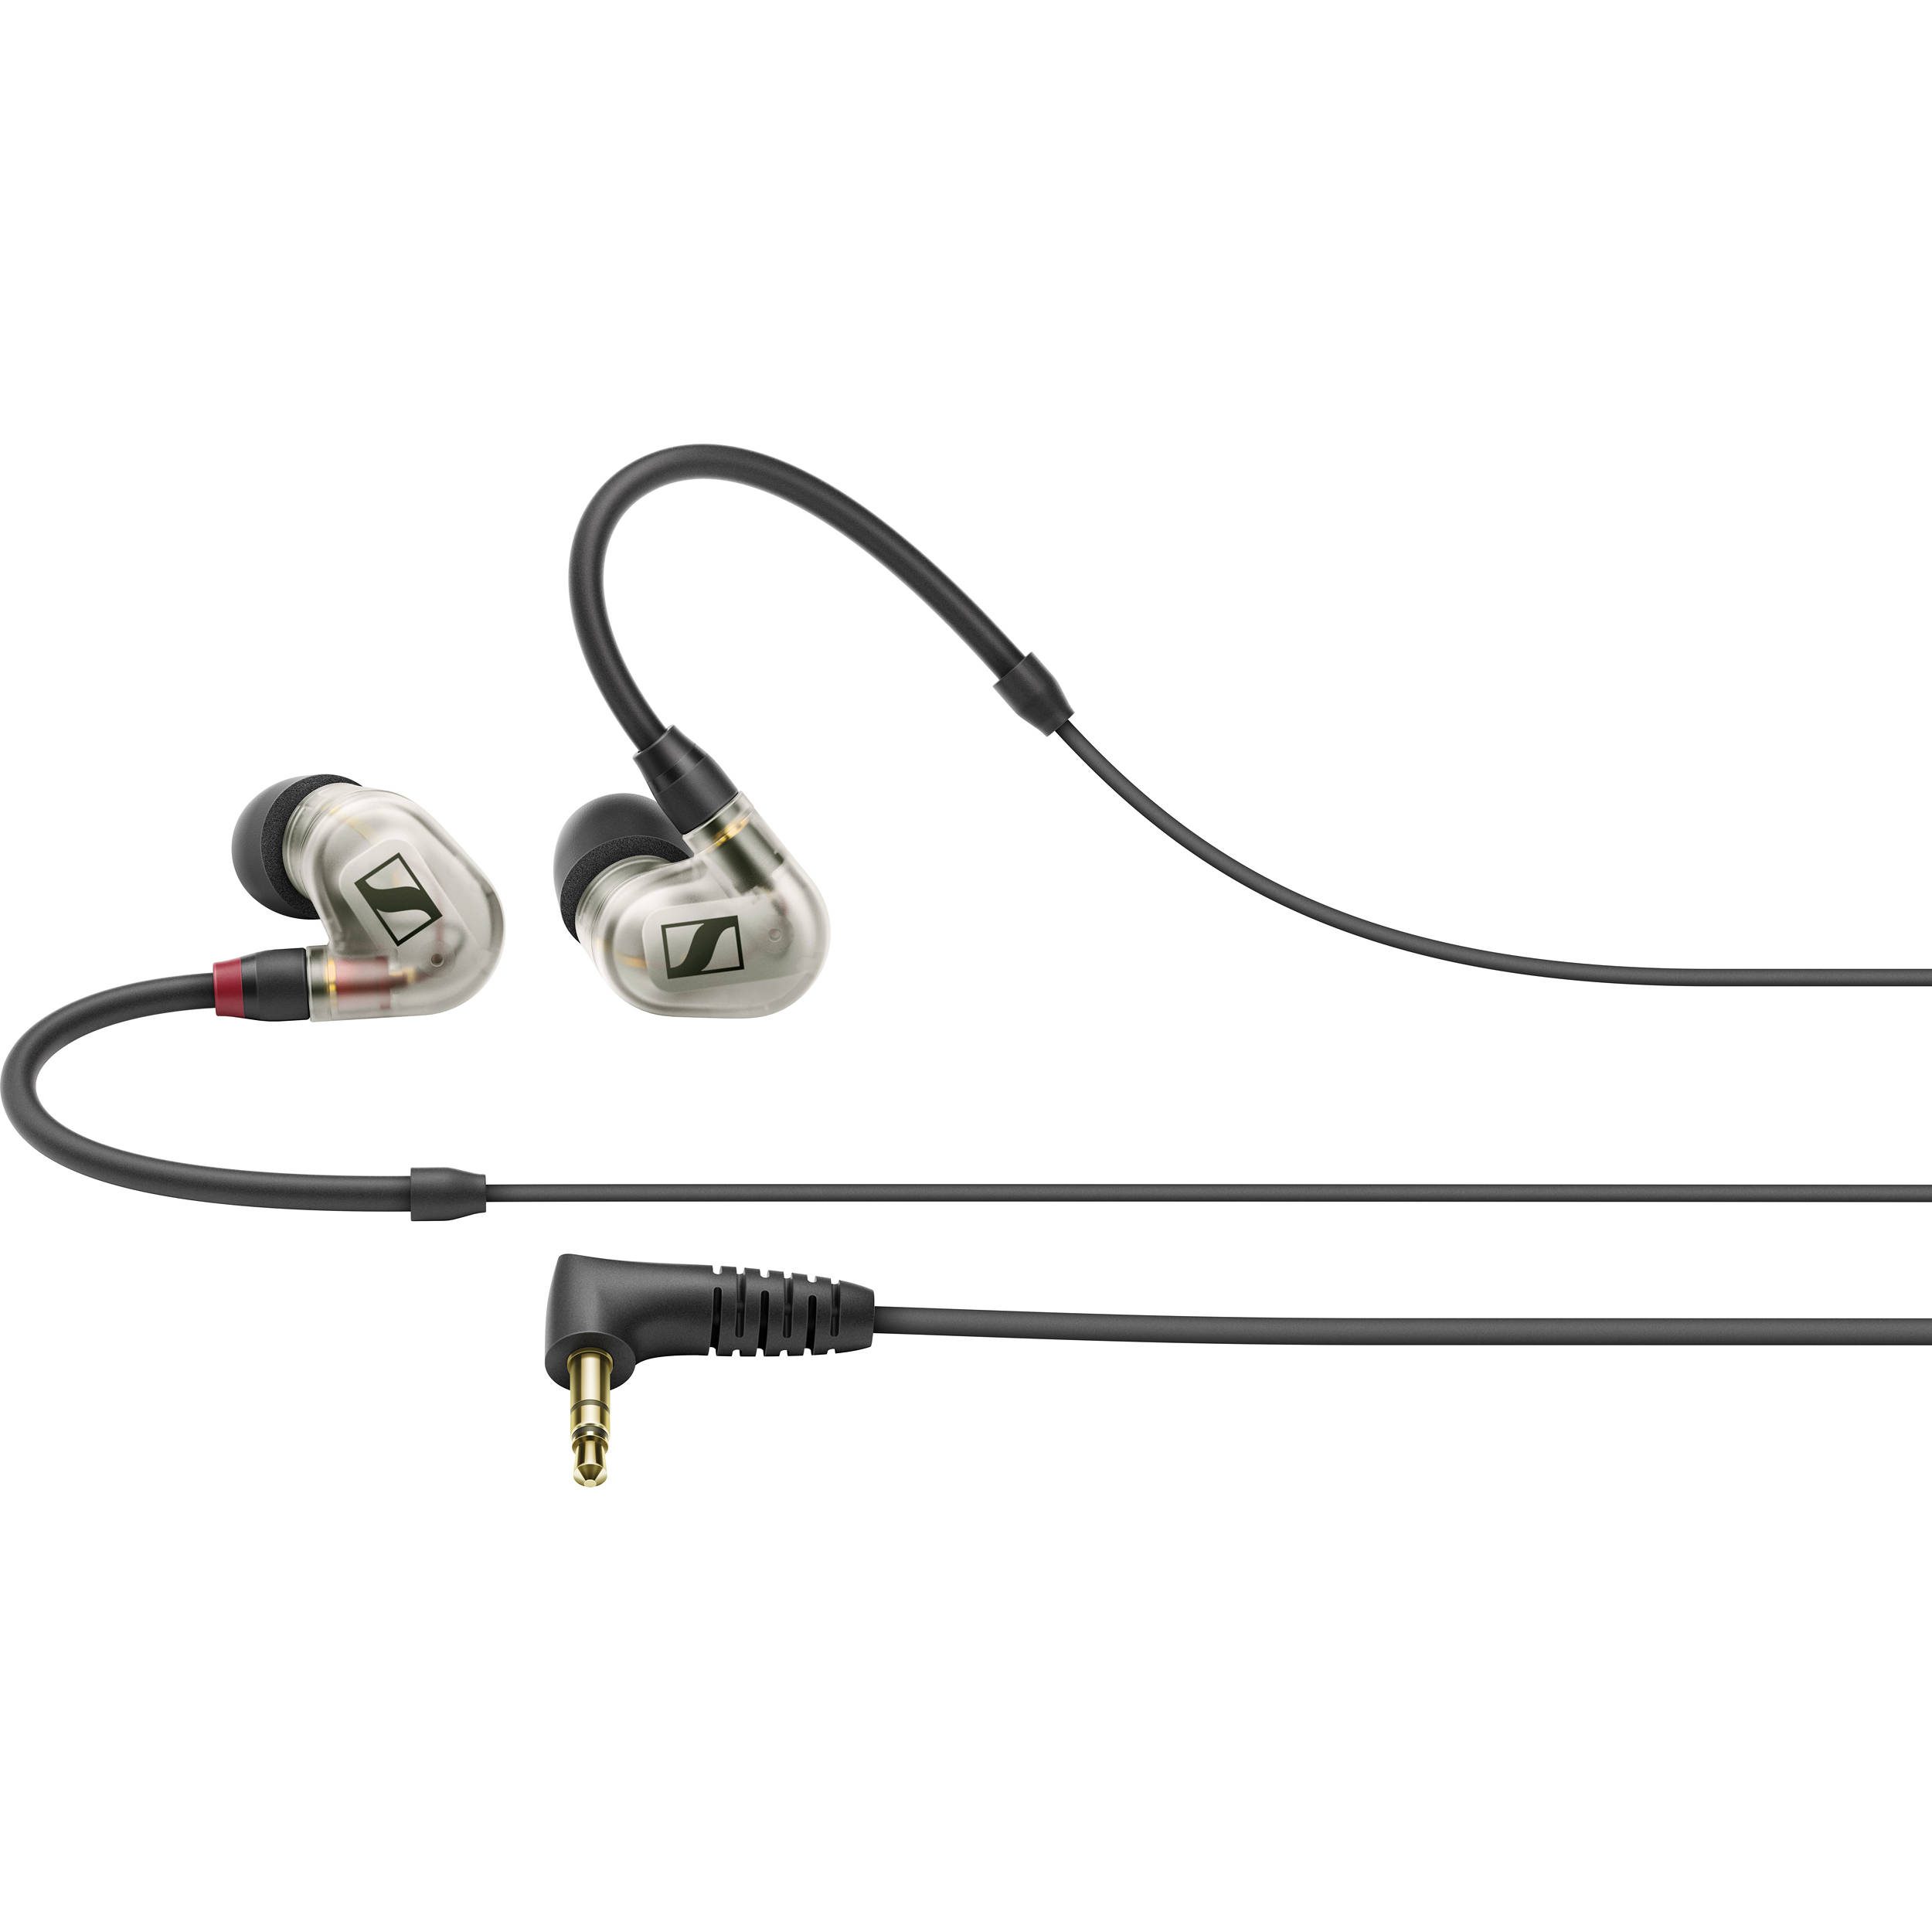 https://audioshopdubai.com/product/sennheiser-mk-4-studio-condenser-microphone-with-elastic-shockmount/